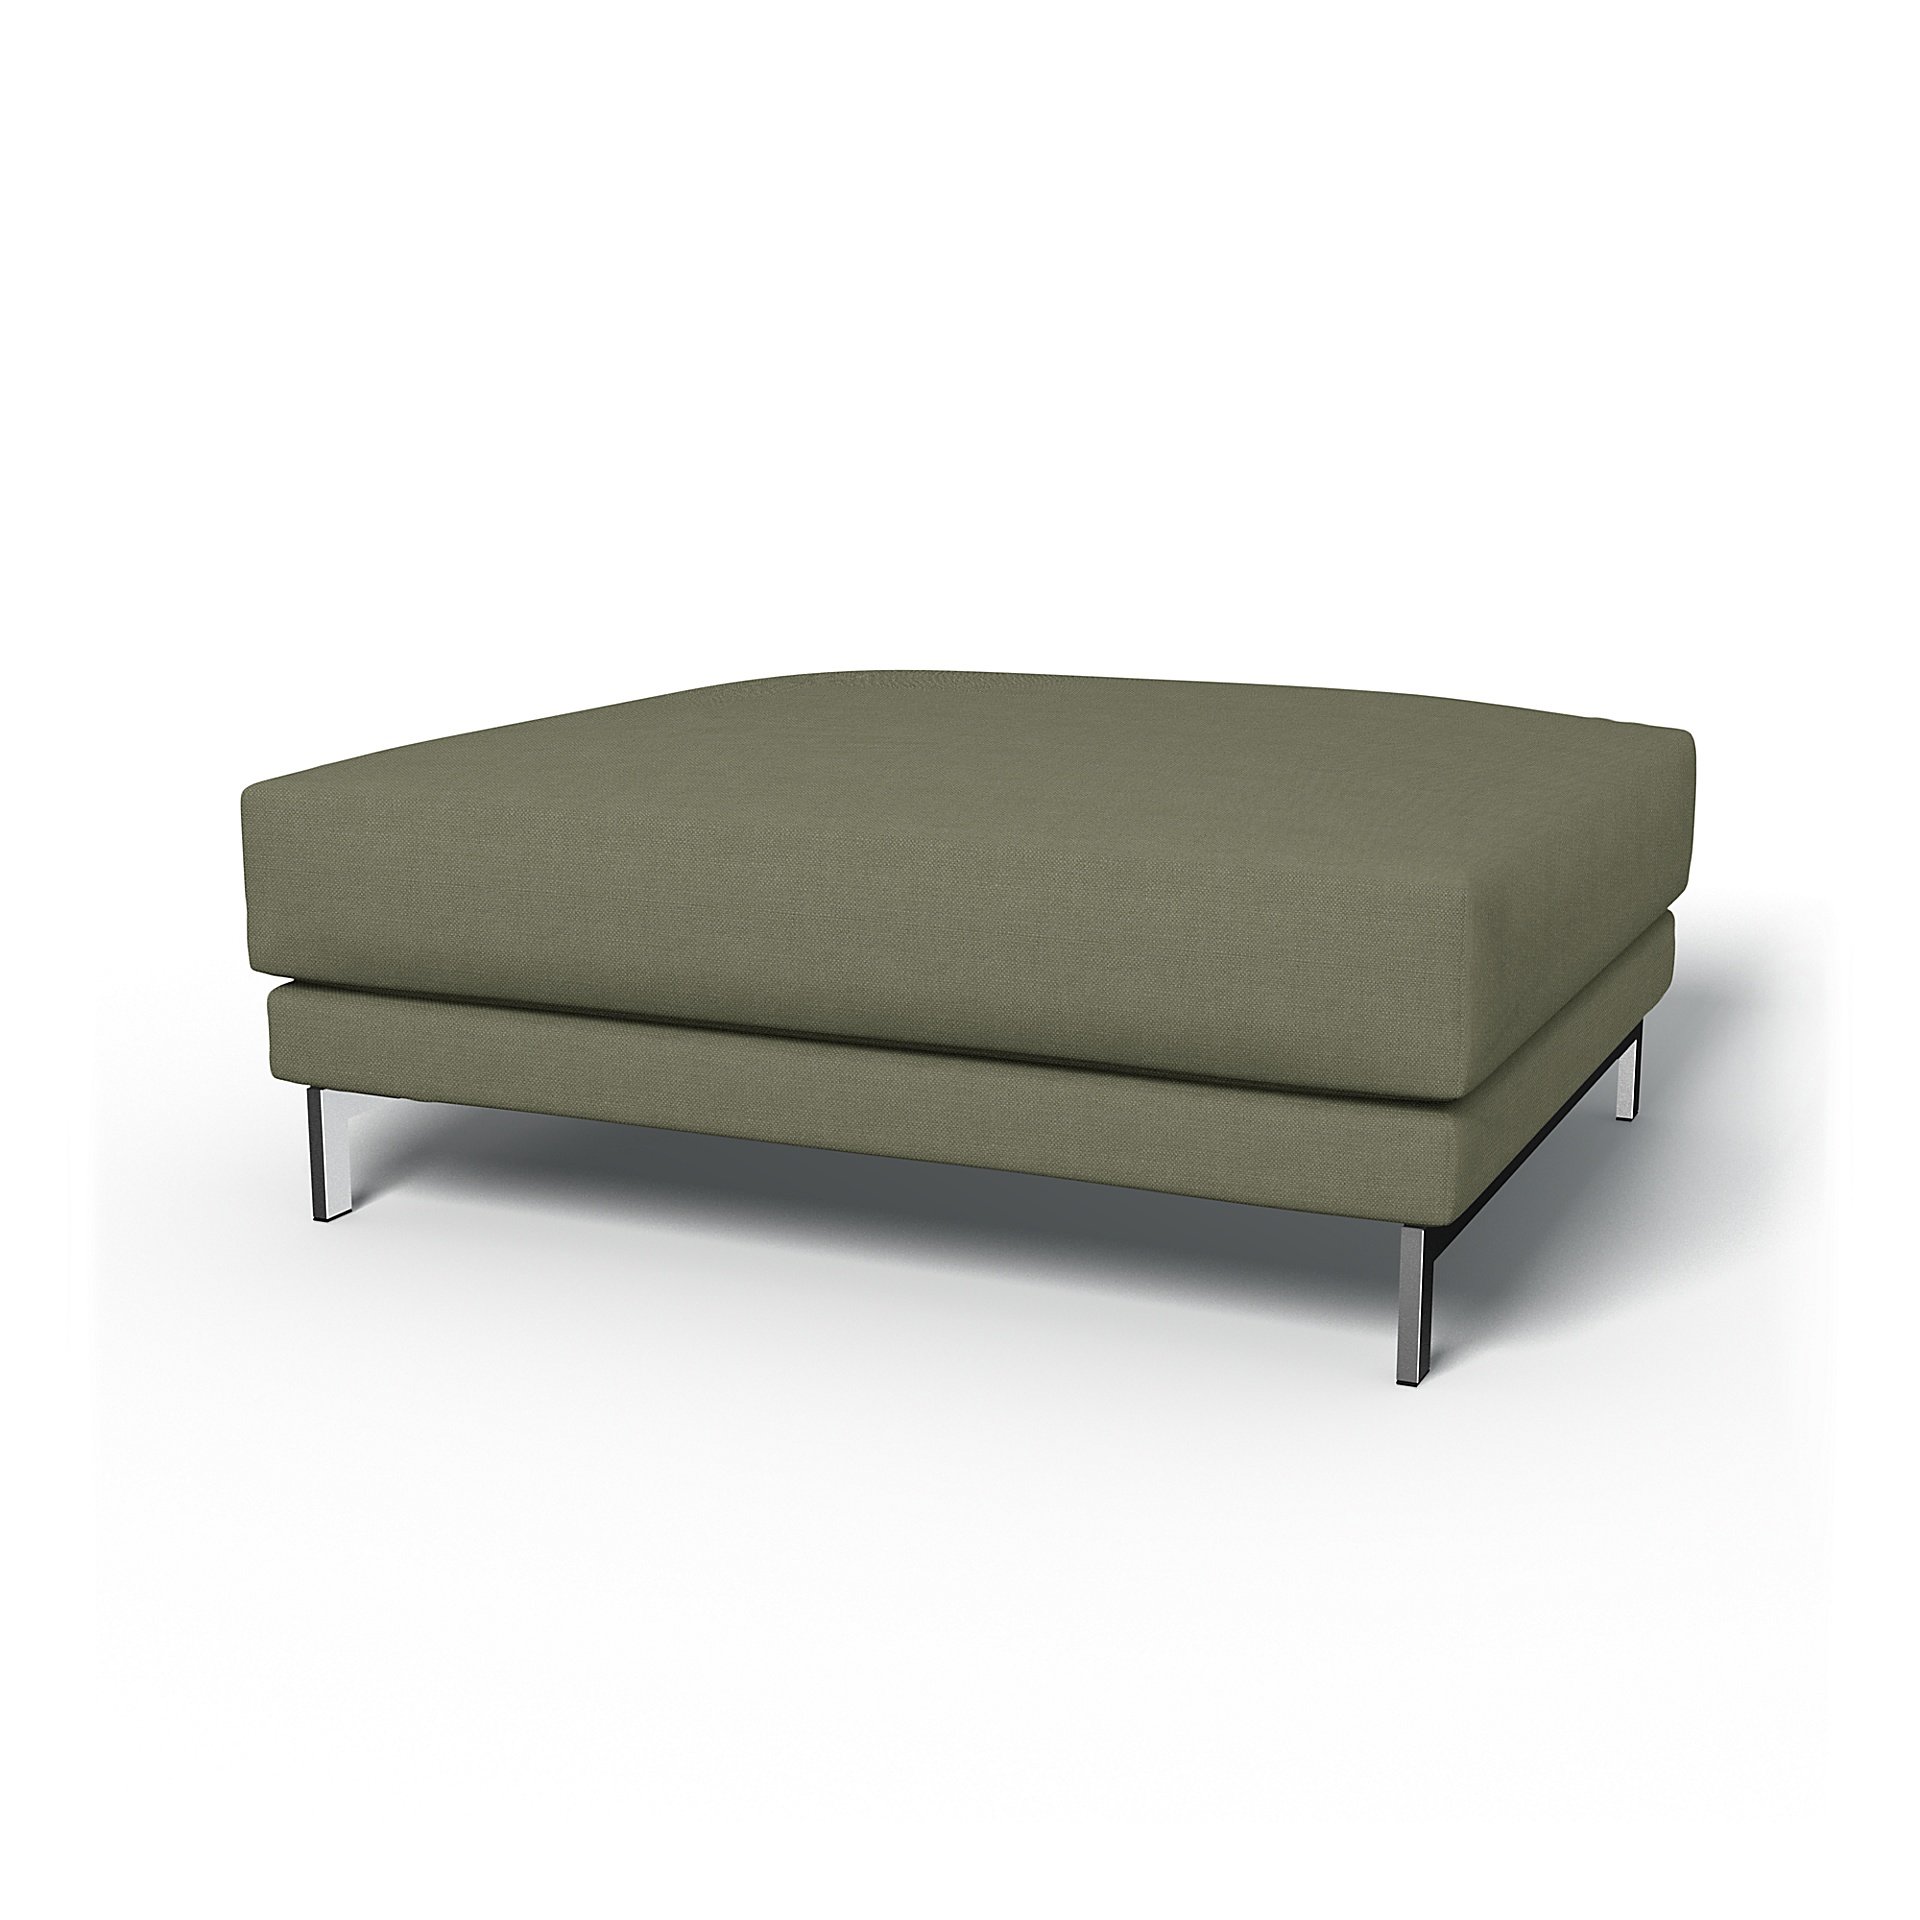 IKEA - Nockeby Footstool Cover, Sage, Linen - Bemz